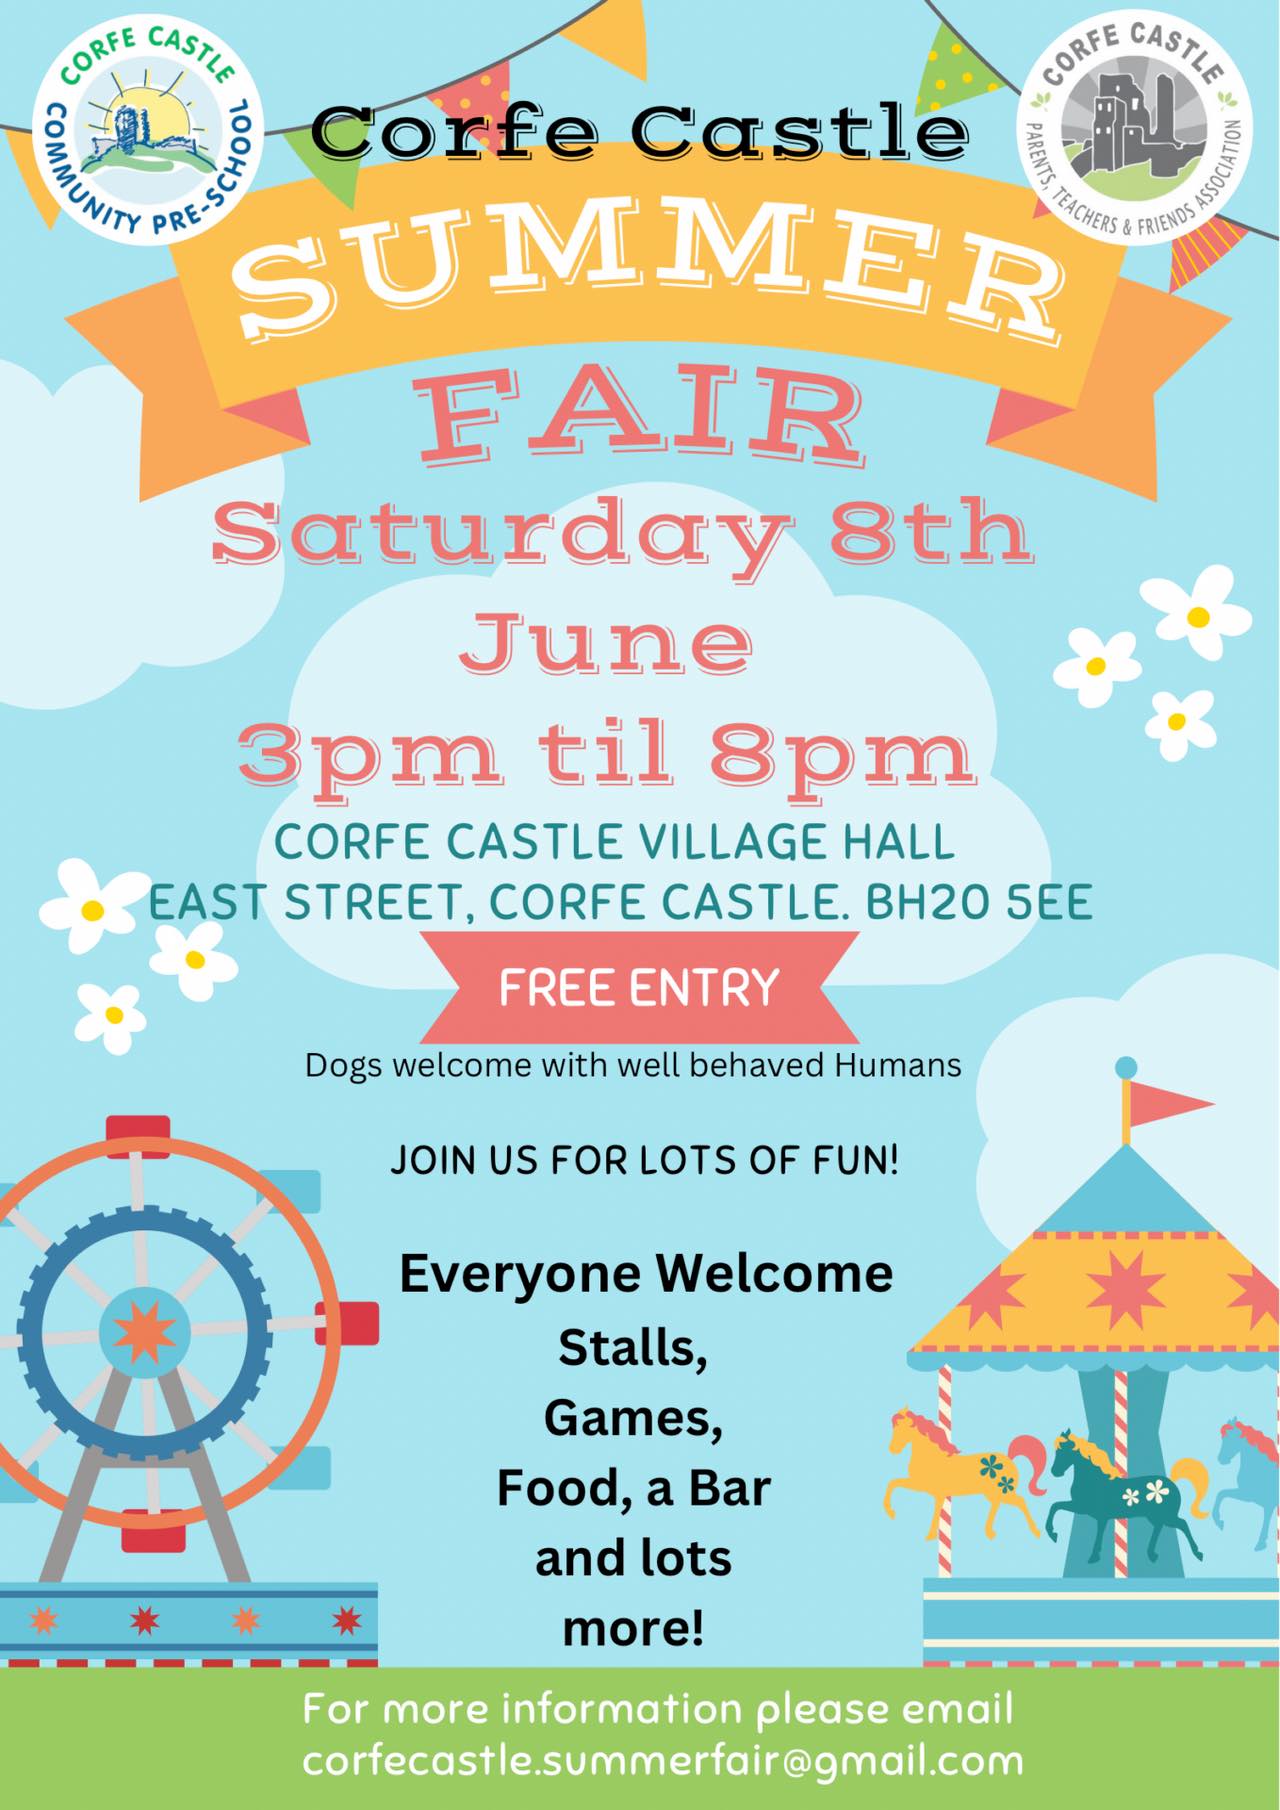 Corfe Castle Summer fair